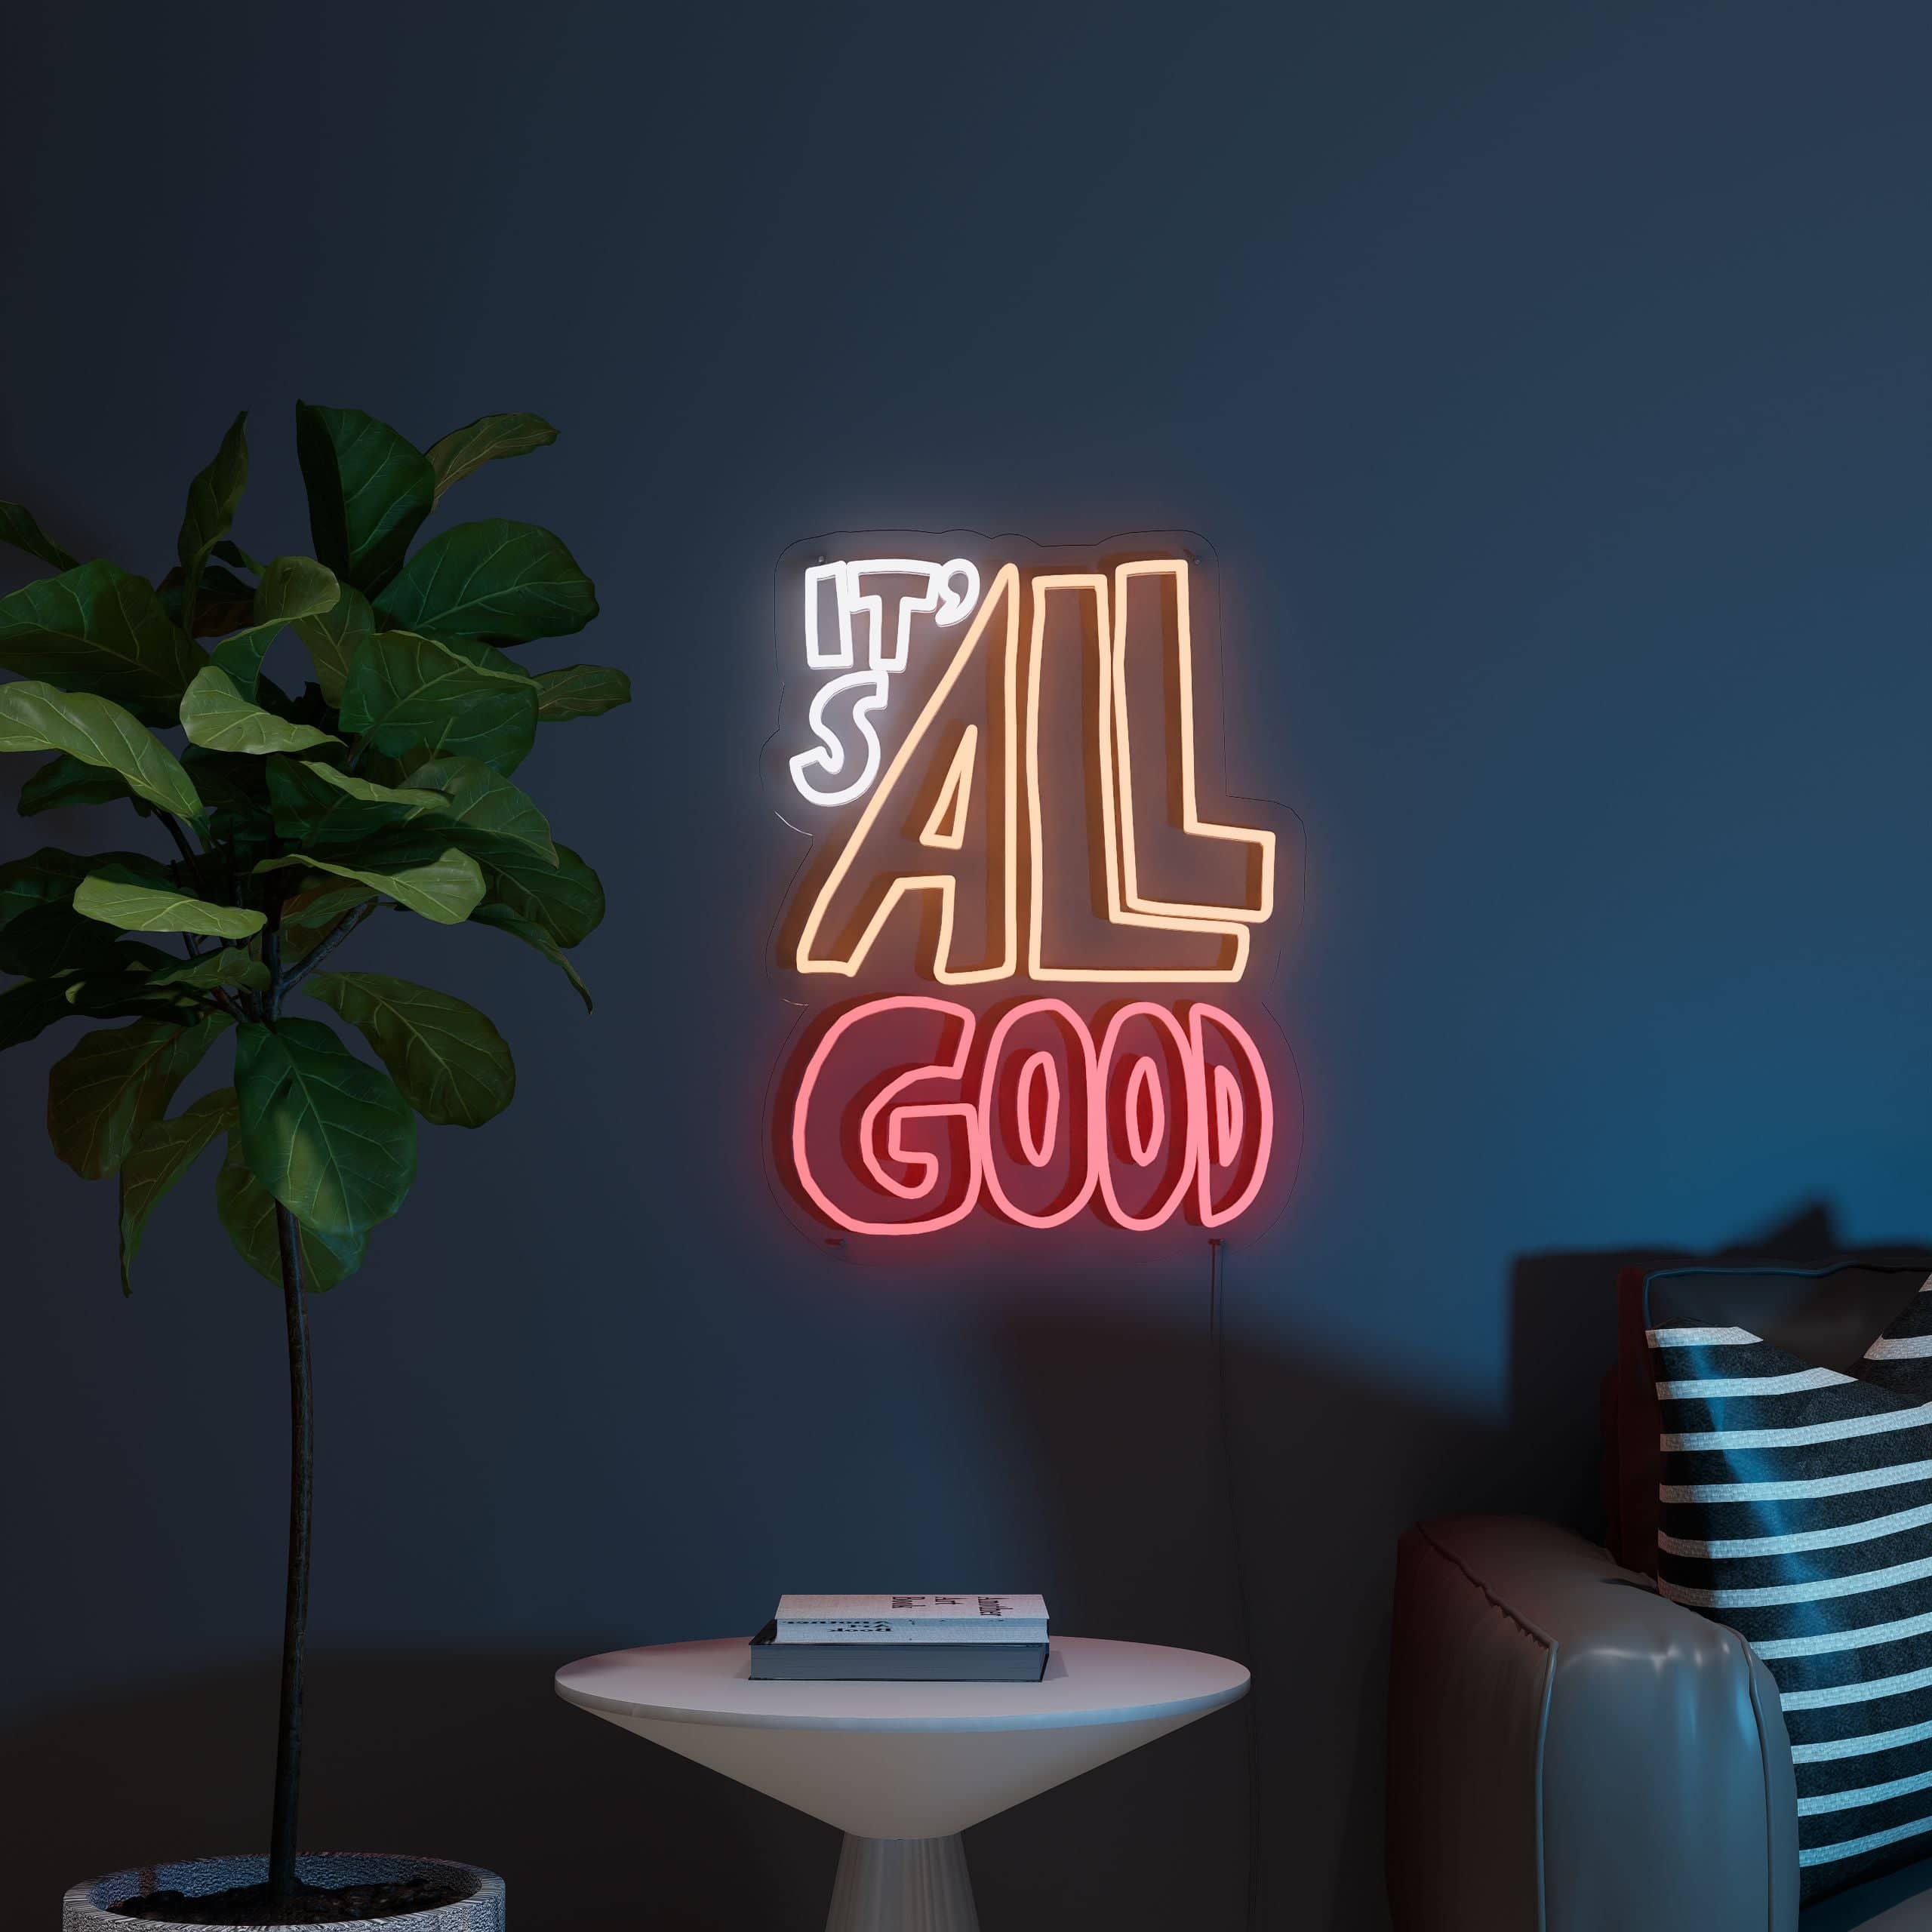 Custom neon sign radiates 'It's All Good' vibes